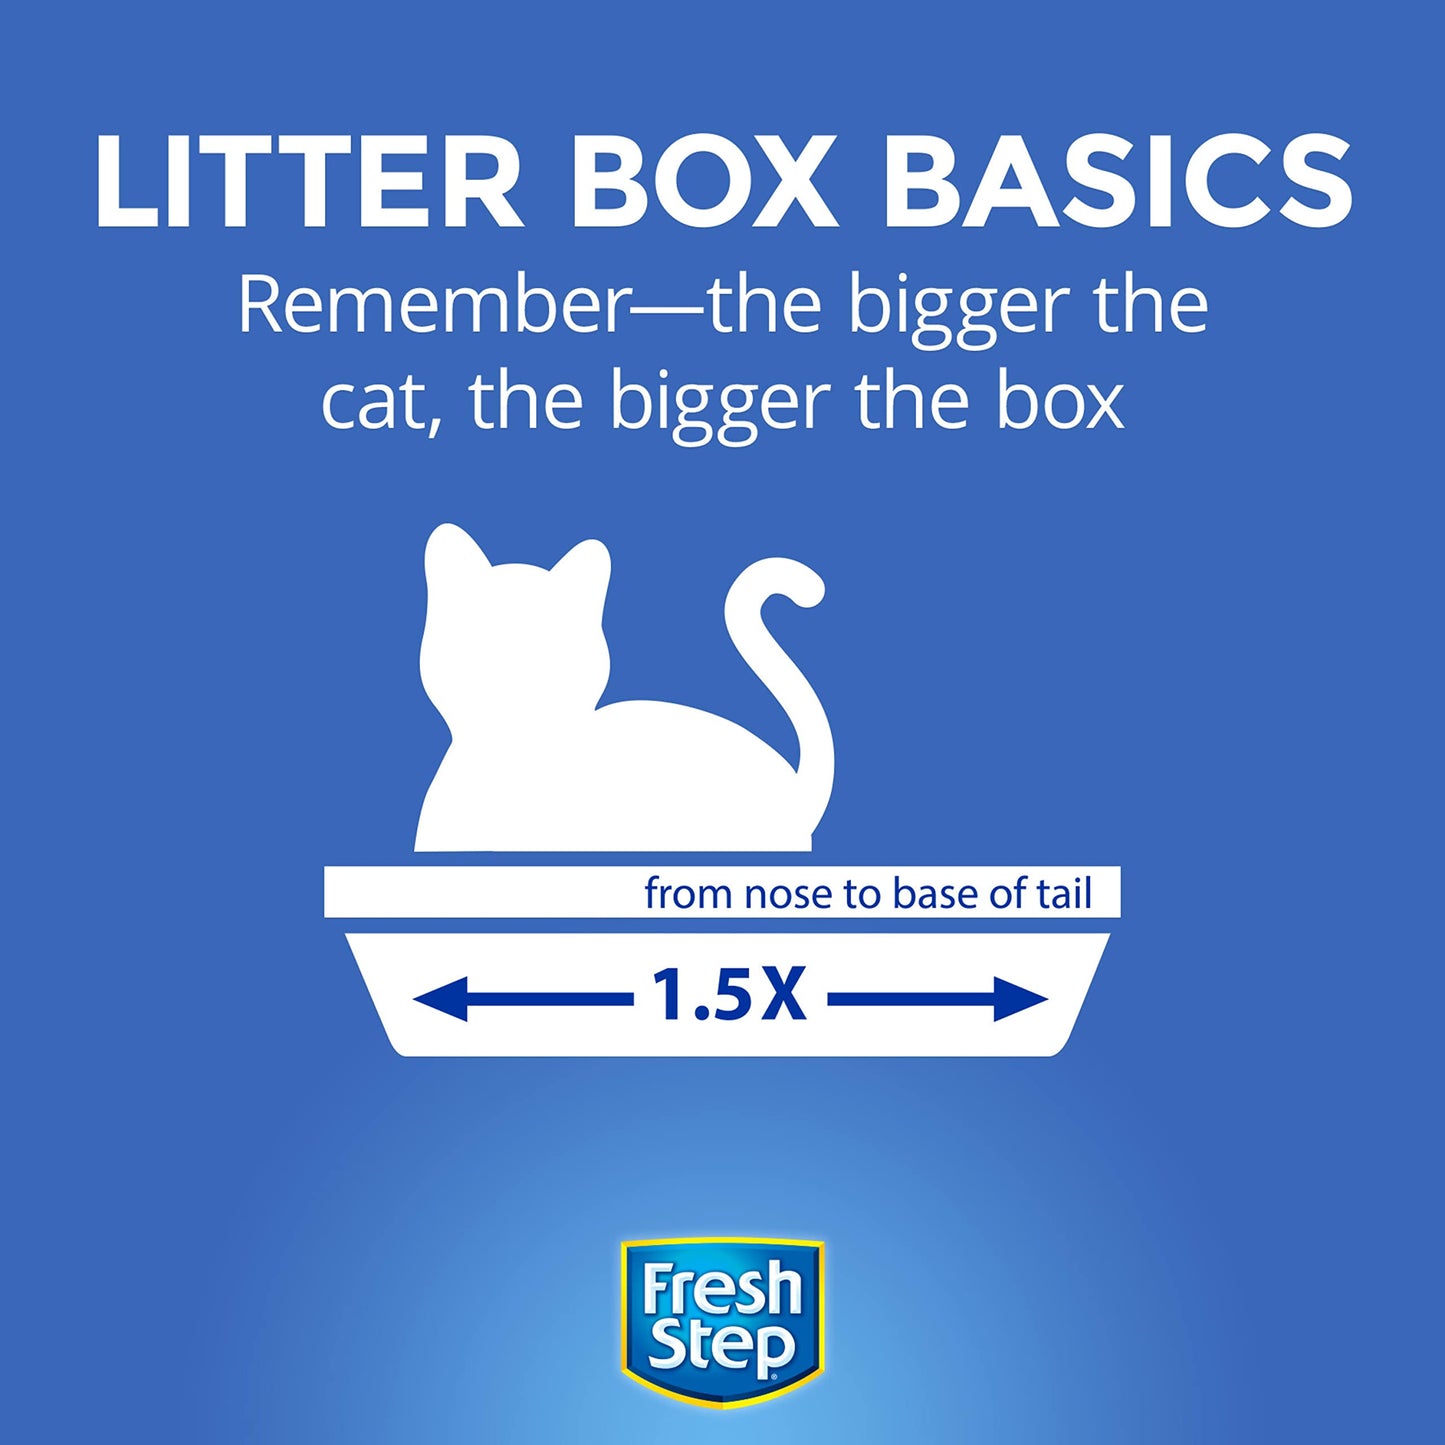 Fresh Step Clumping Cat Litter - Odor Shield, 14 lb